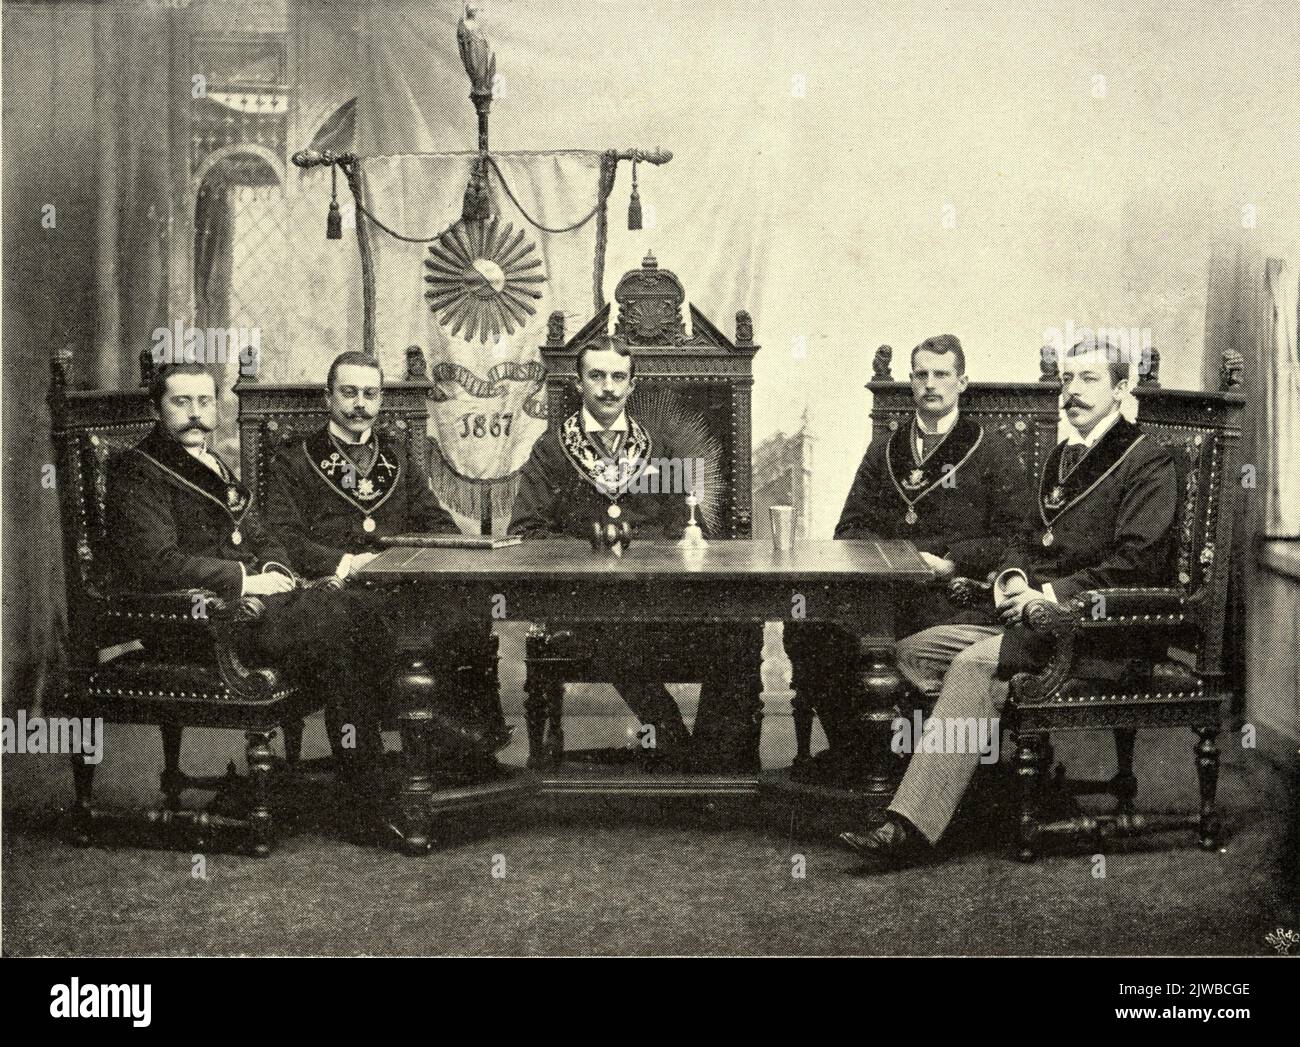 Gruppenportrait des Senats des Utrechtssch Student Corps (U.S.C.) des Jahres 1897/98: B.C. de Jonge, H. Waller, L.E. Brandt, C.E.A. van Hoogenhuyze und H. Hooglandt. Frei, um einen Tisch sitzend. Stockfoto